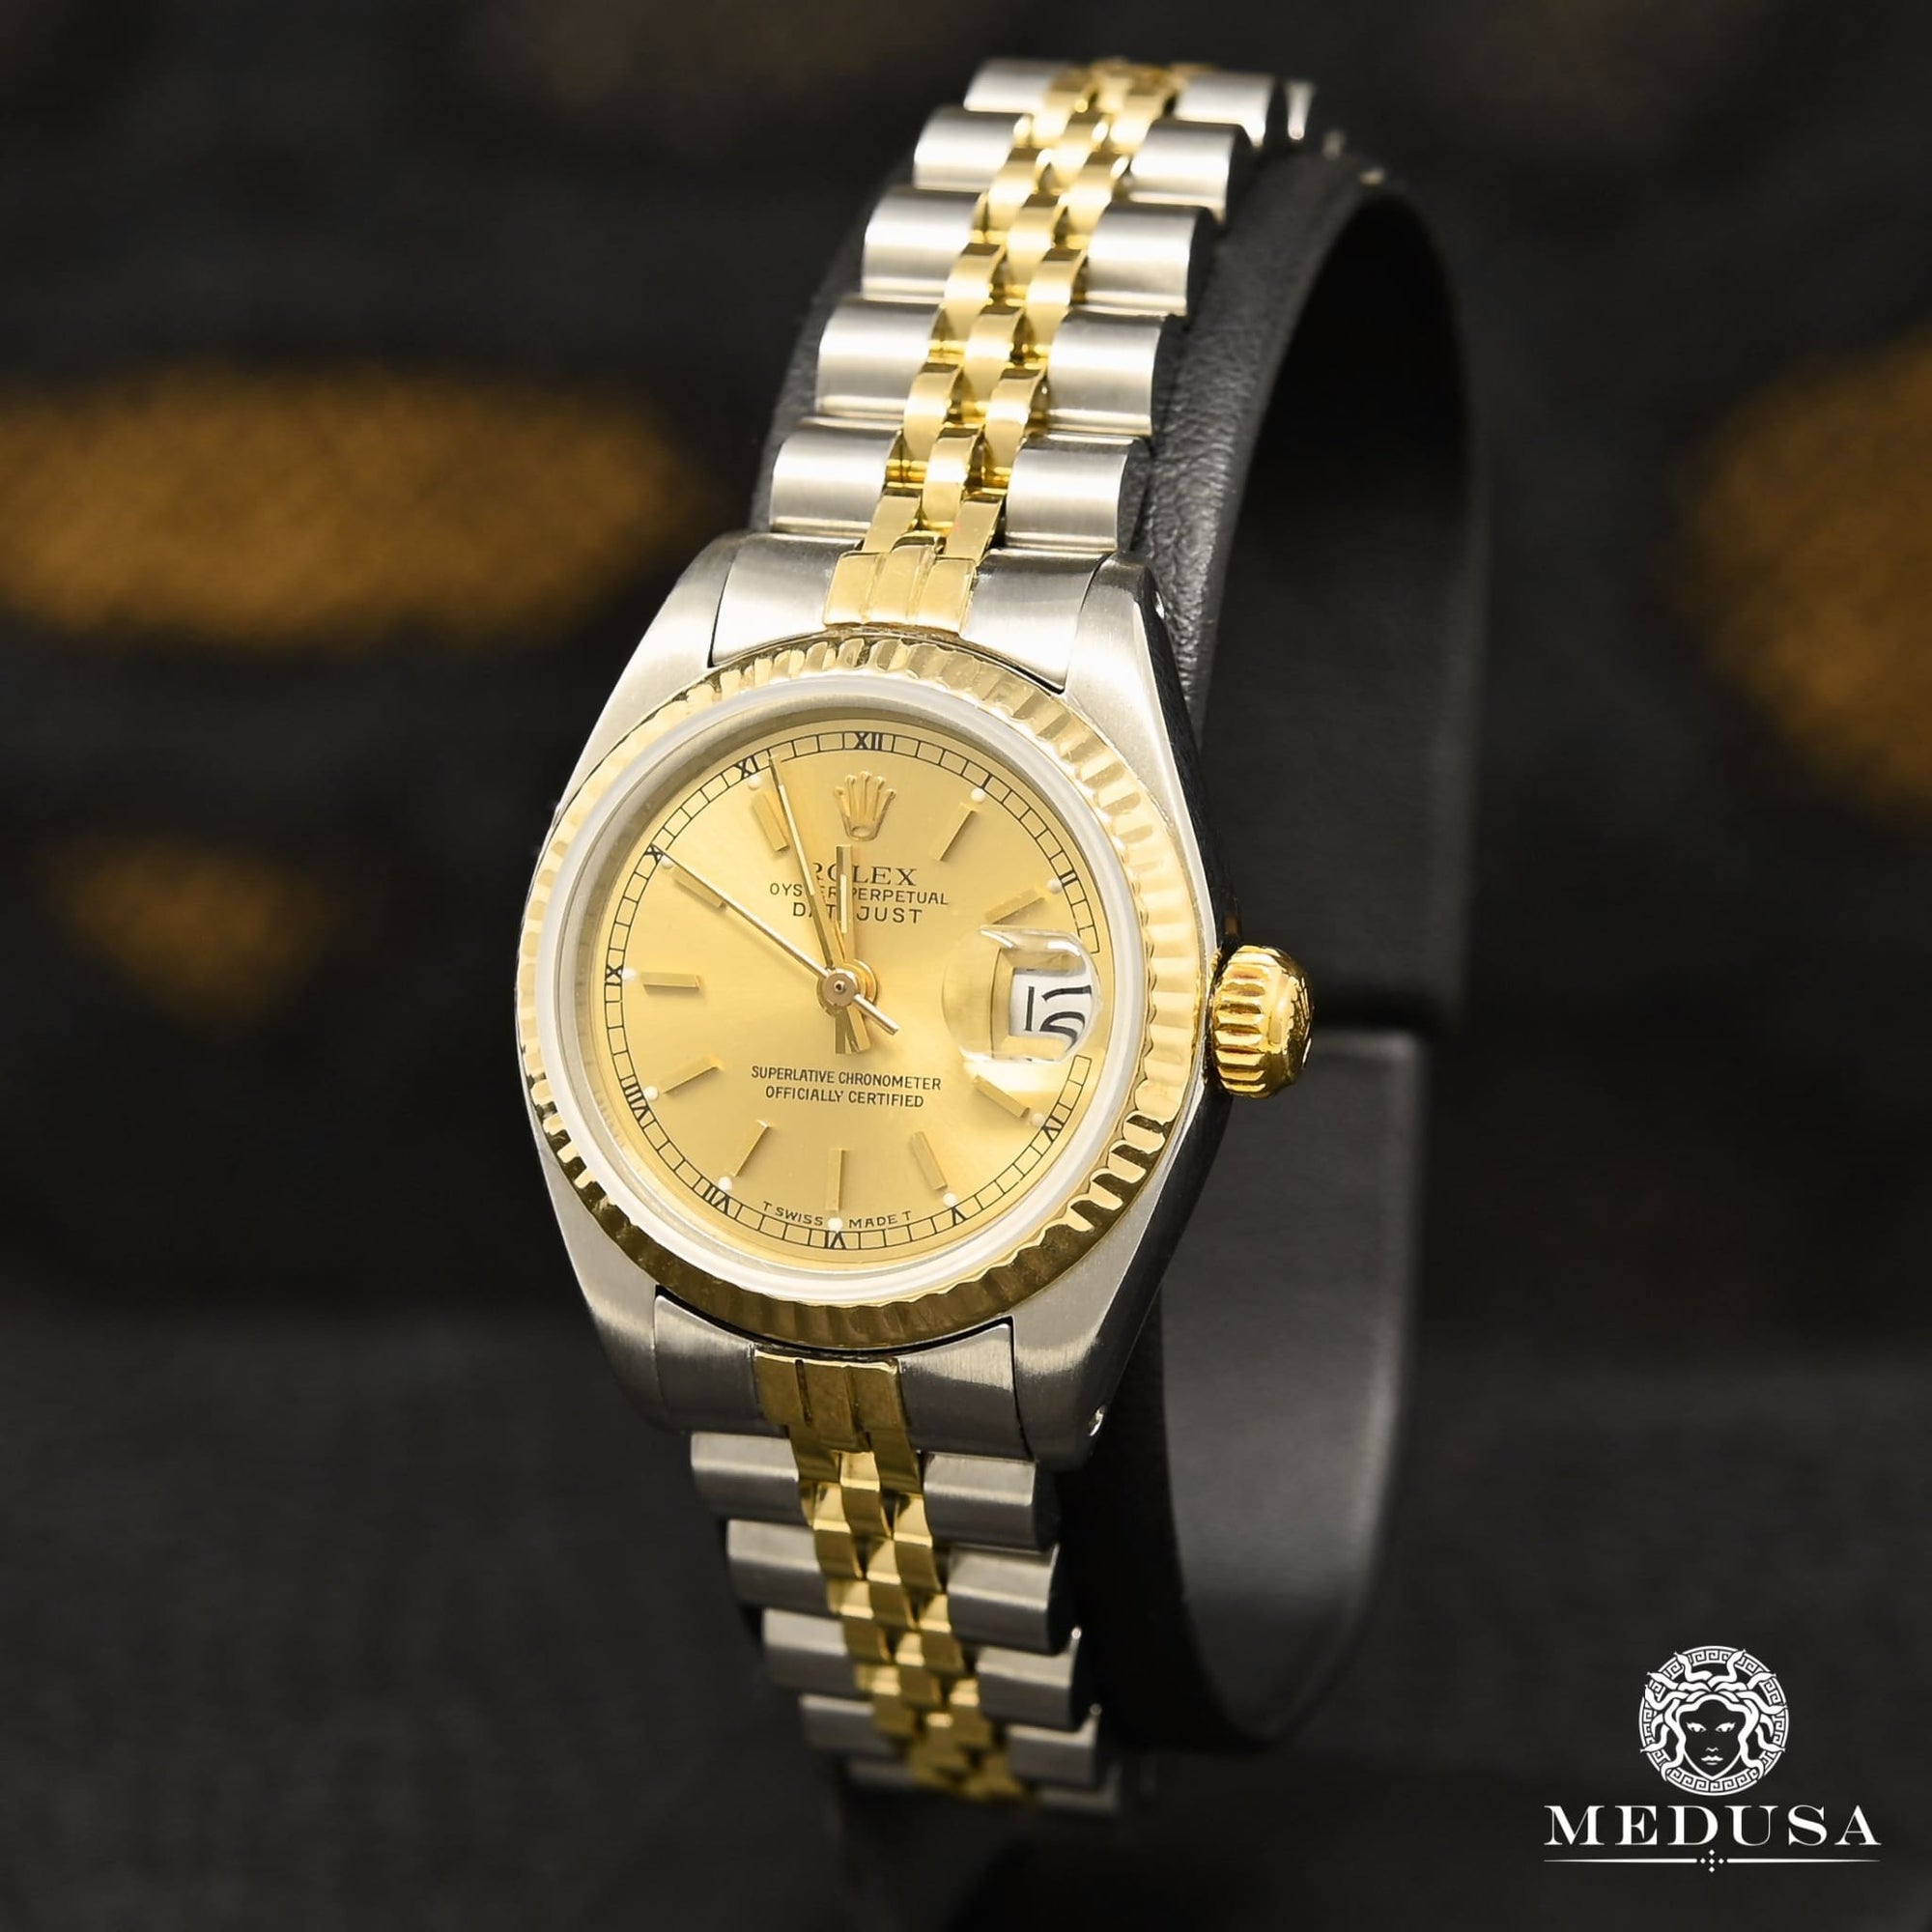 Rolex watch | Rolex Datejust Women's Watch 26mm - Gold Gold 2 Tones